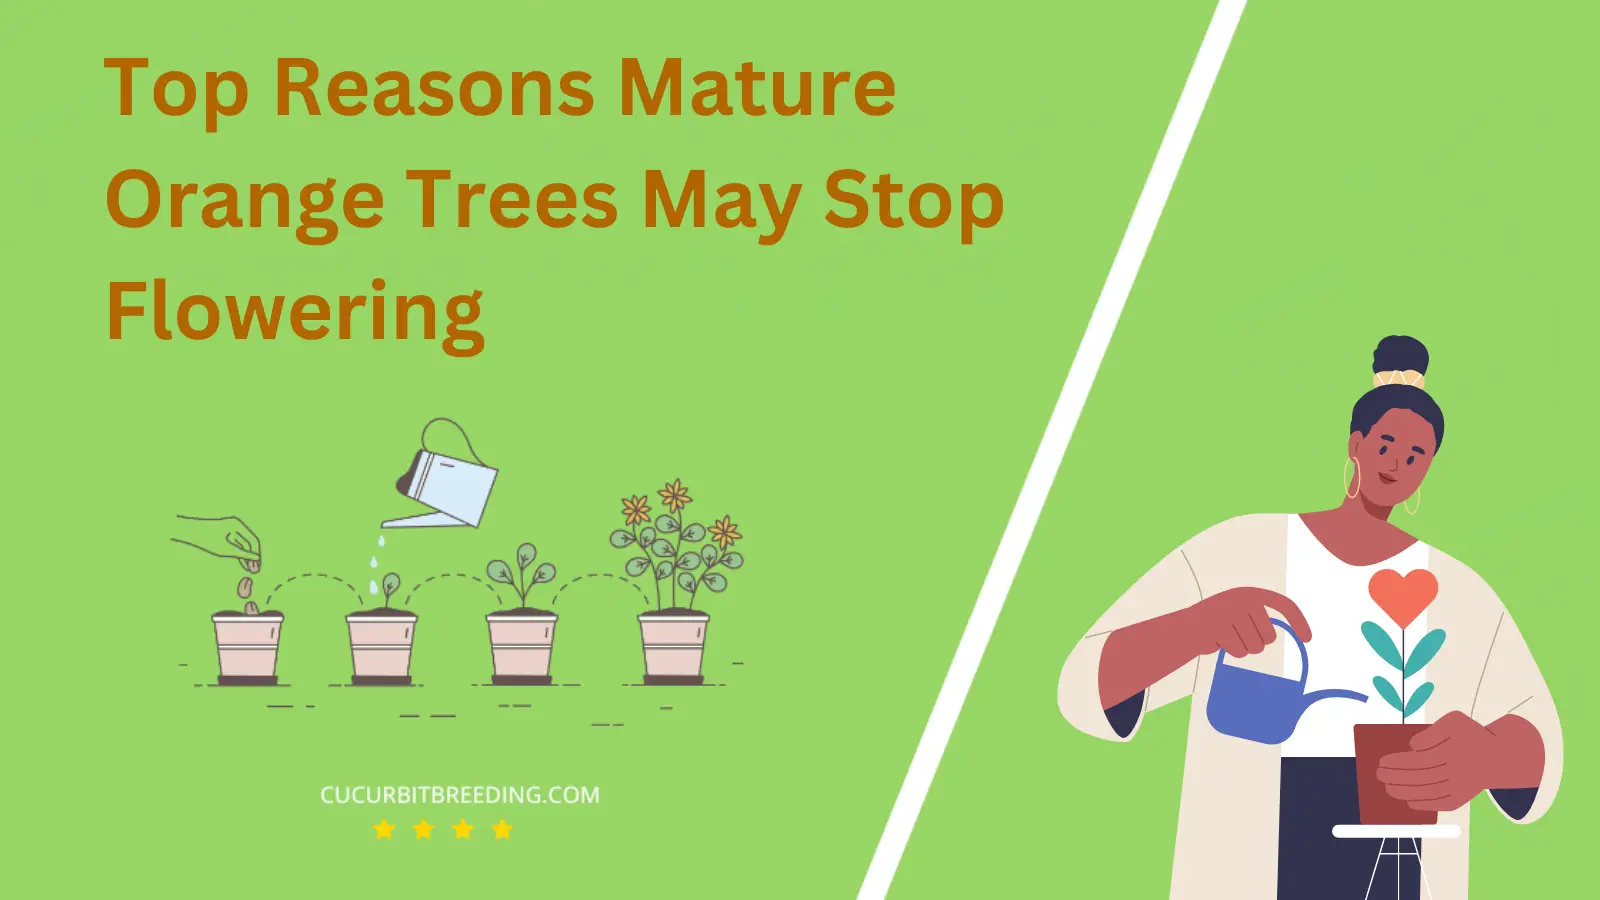 Top Reasons Mature Orange Trees May Stop Flowering